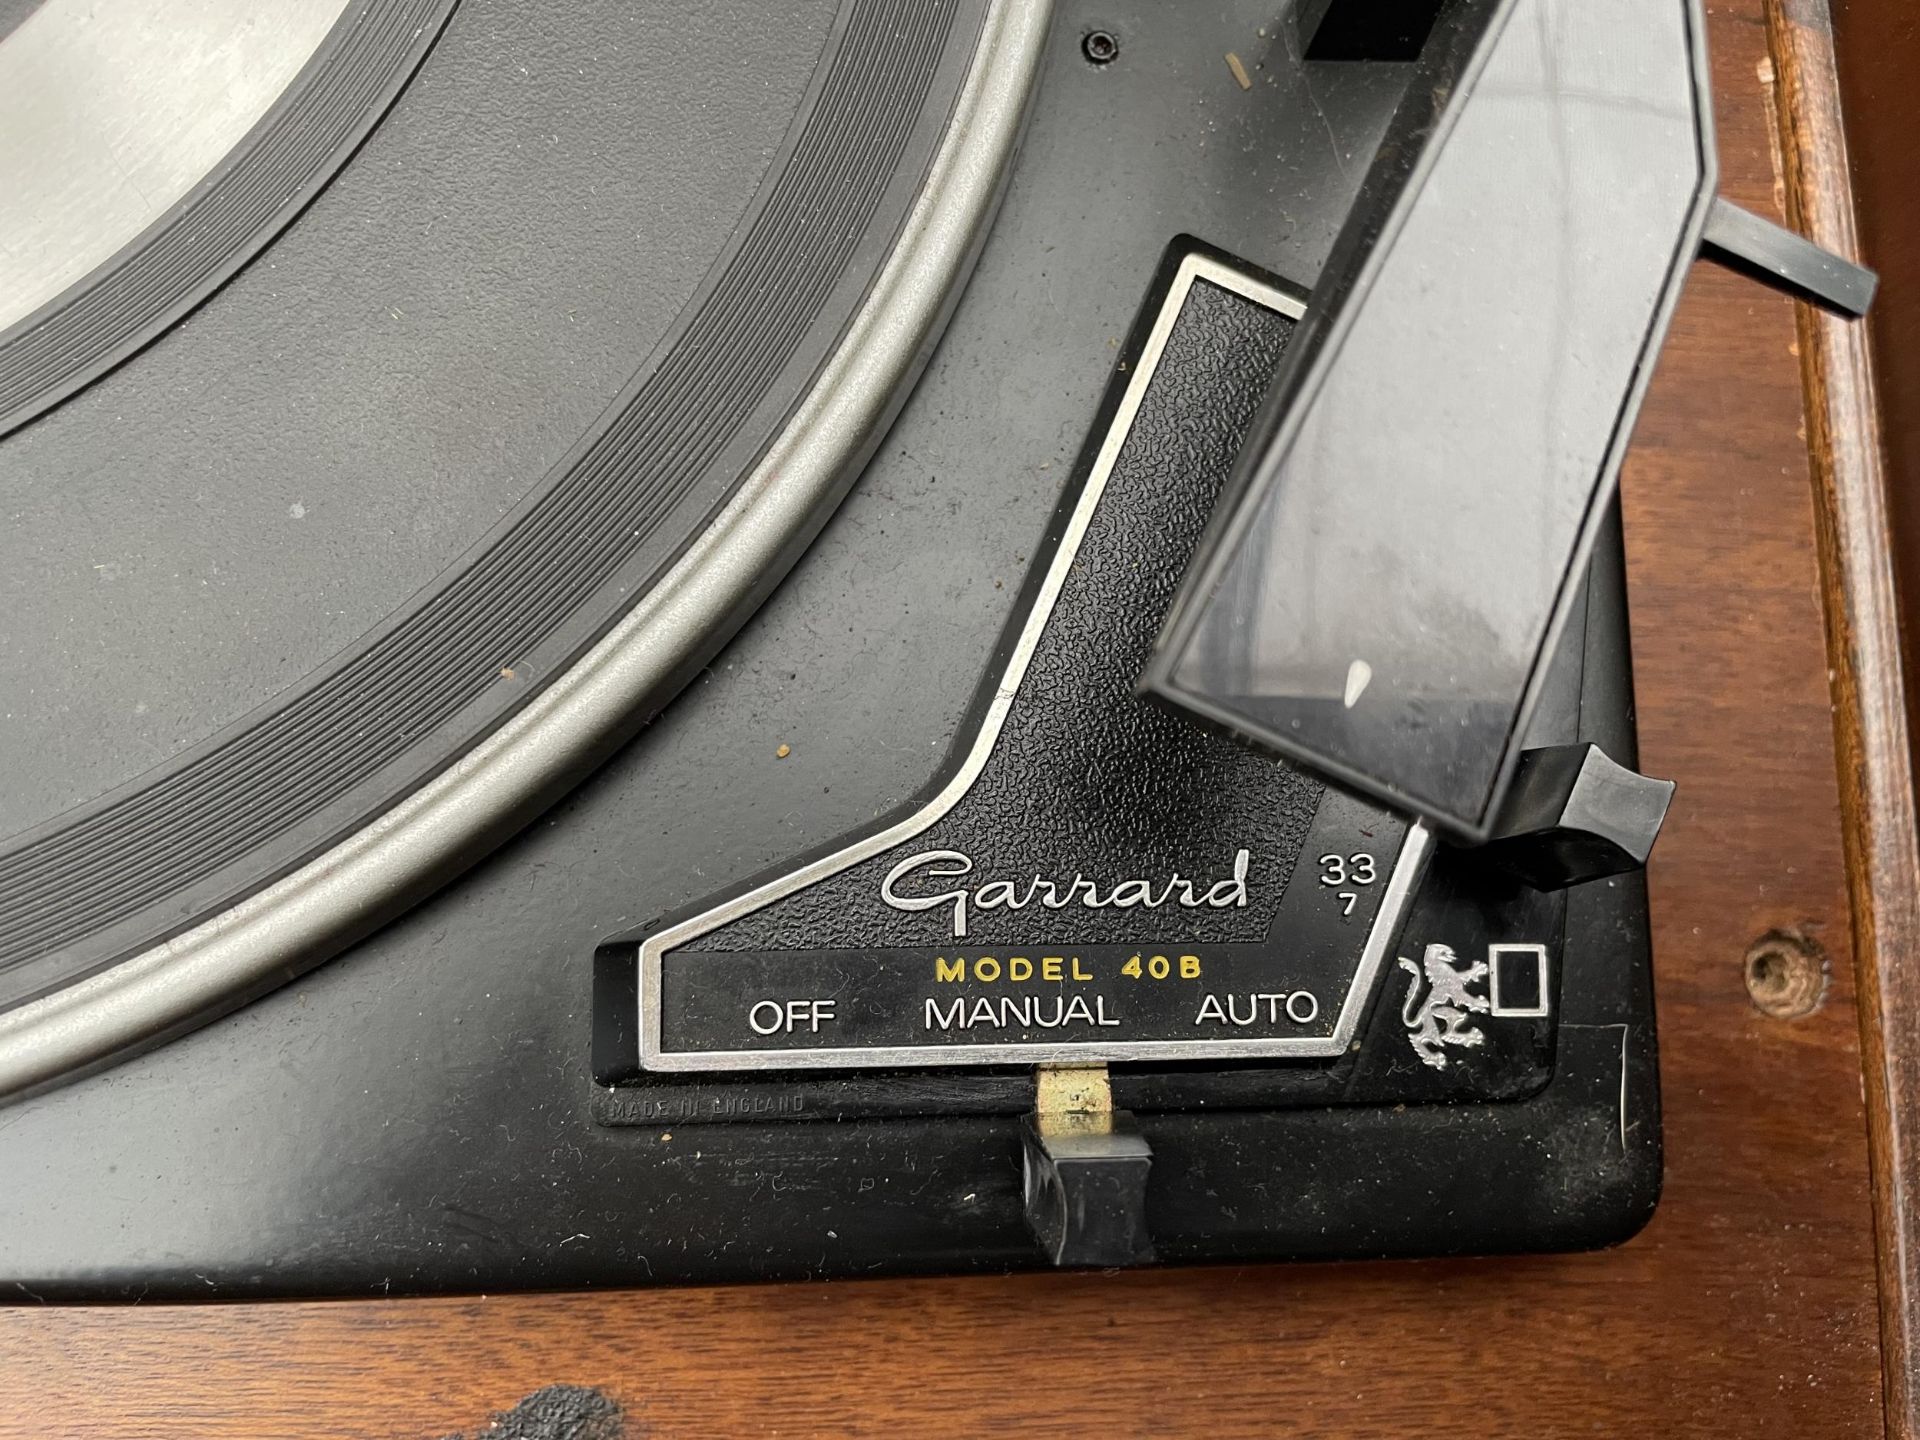 A DYNATRON RADIOGRAM IN WALNUT CASE WITH GARRARD DECK - Image 2 of 5